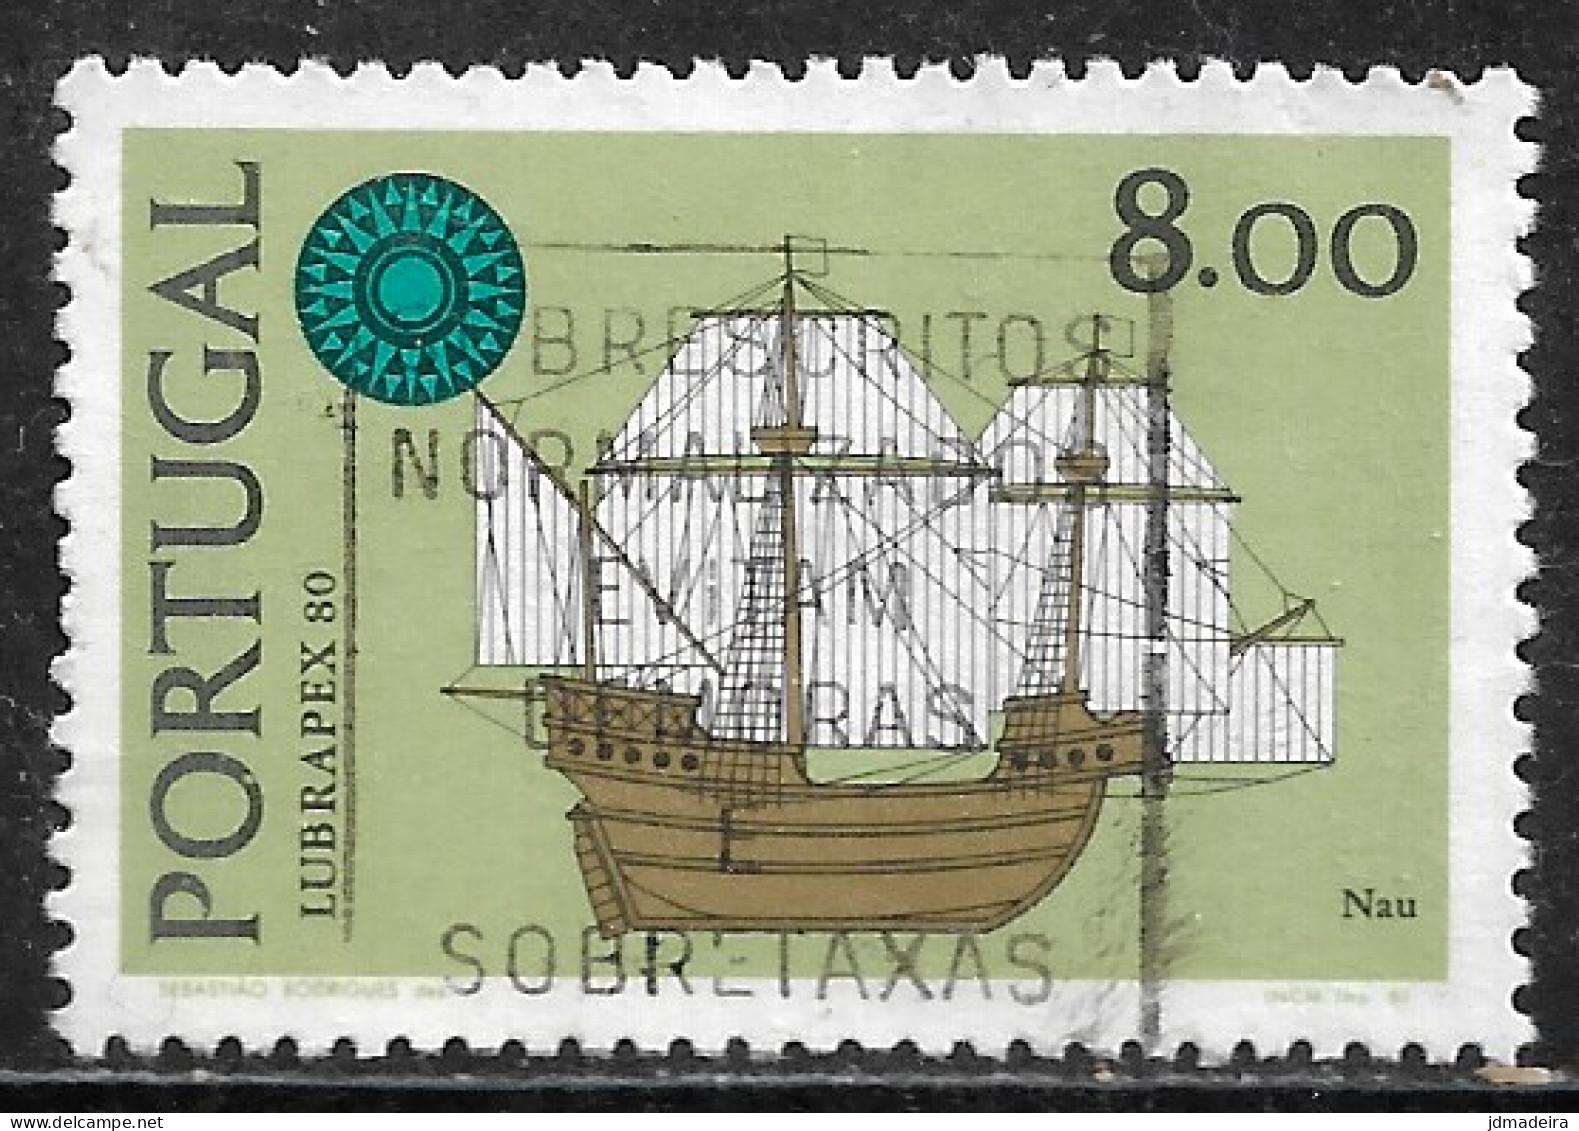 Portugal – 1980 Lubrapex 8.00 Used Stamp - Oblitérés